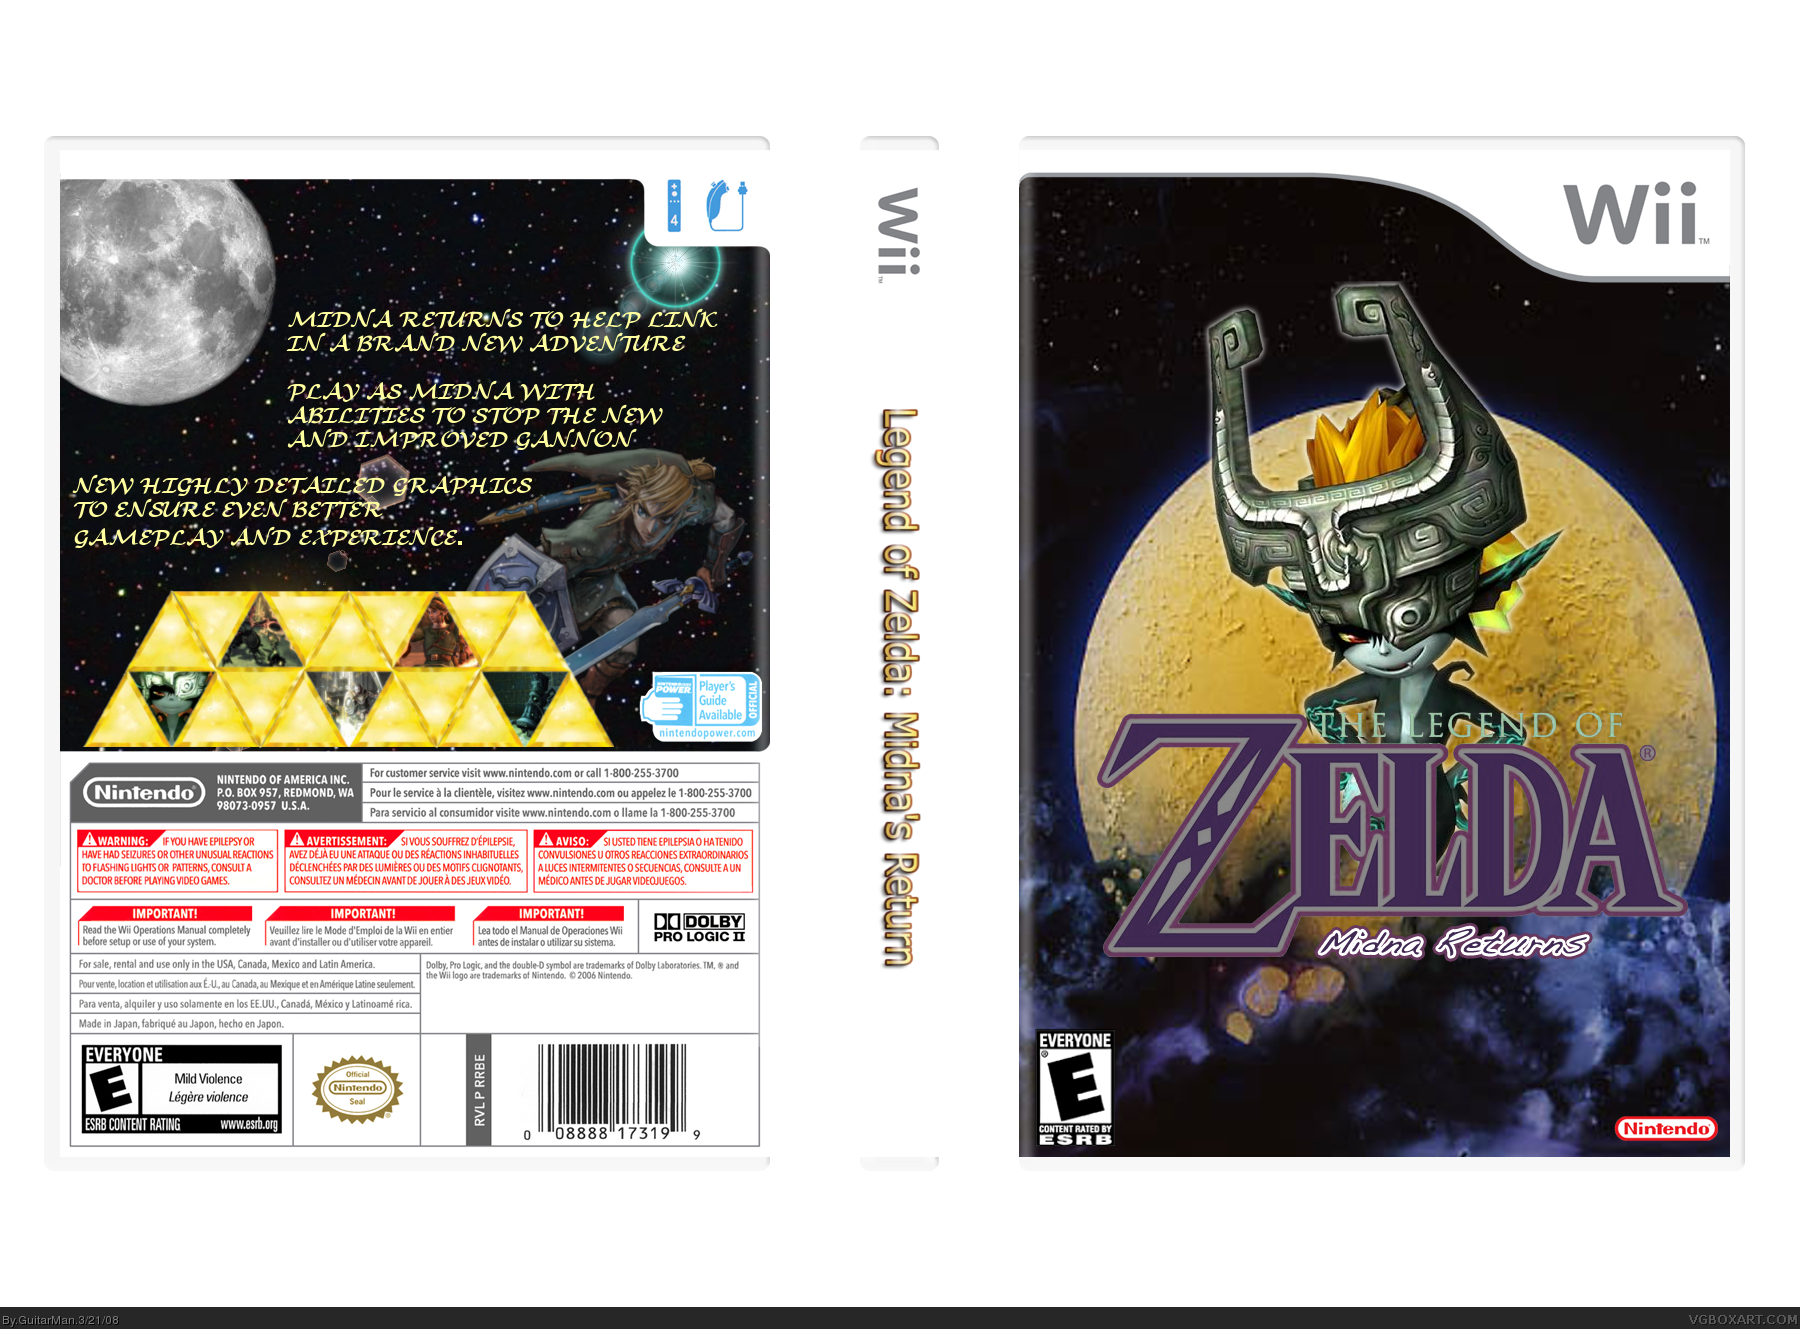 The Legend of Zelda: Midna Returns box cover